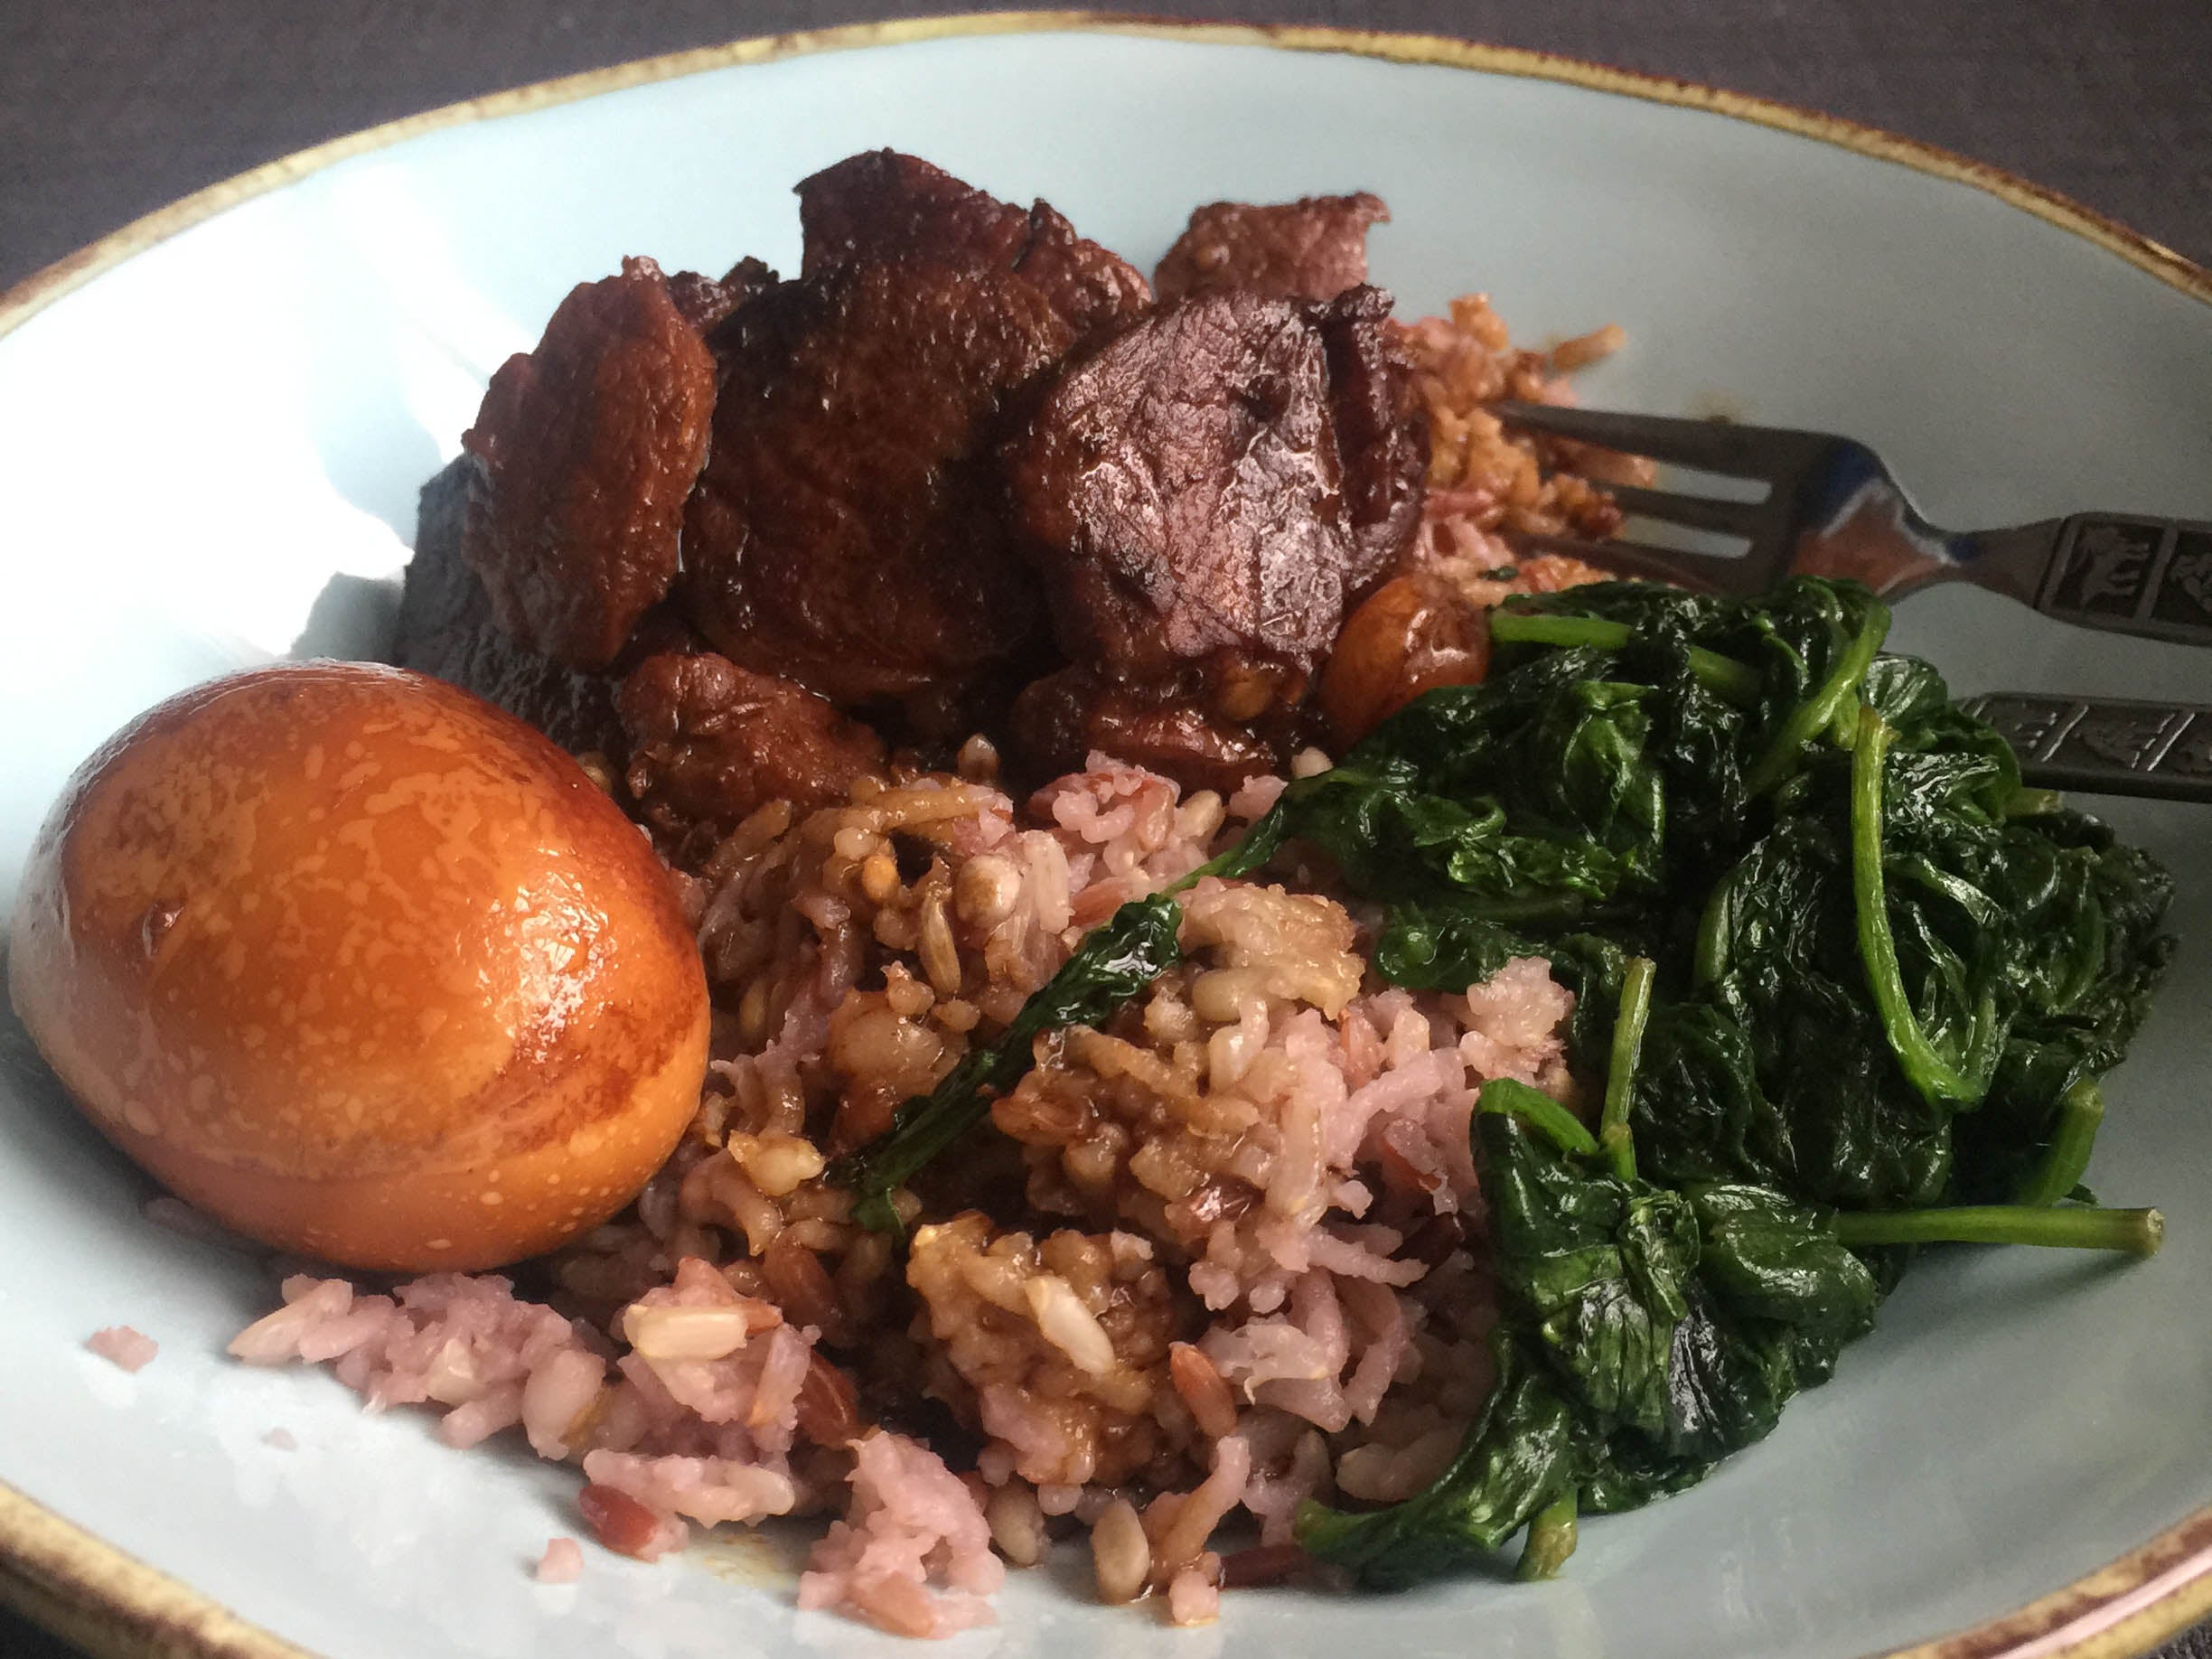 Tau yew bak stewed pork – another classic